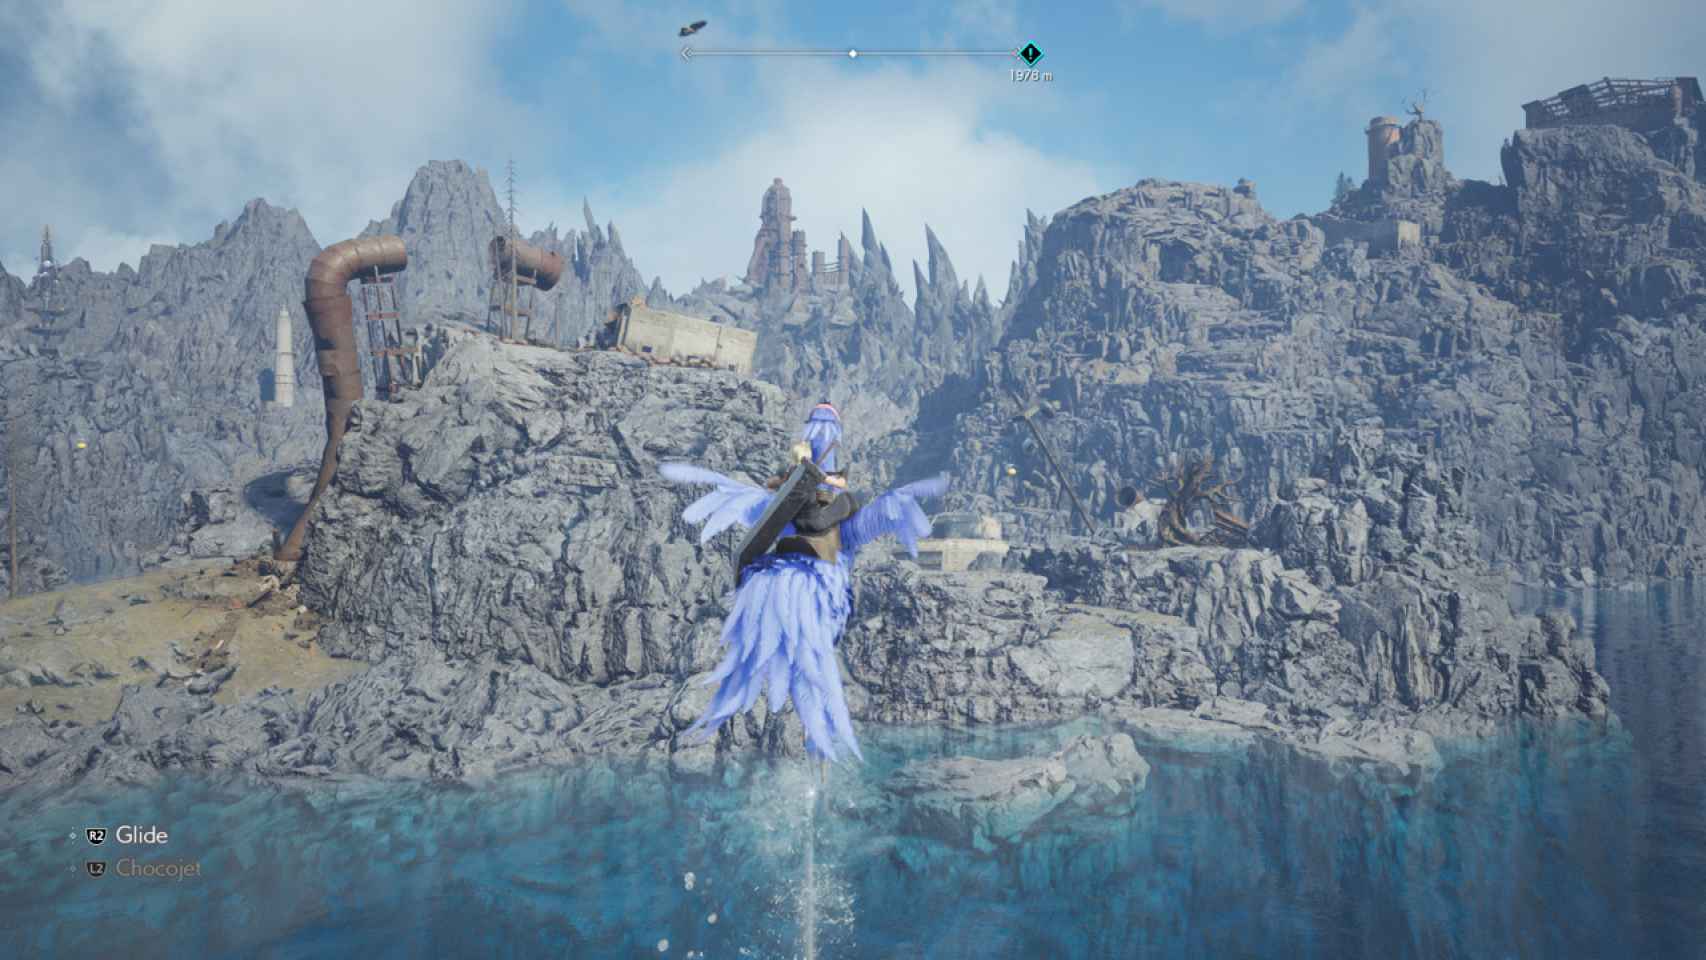 Fotograma del videojuego 'Final Fantasy VII Rebirth'.